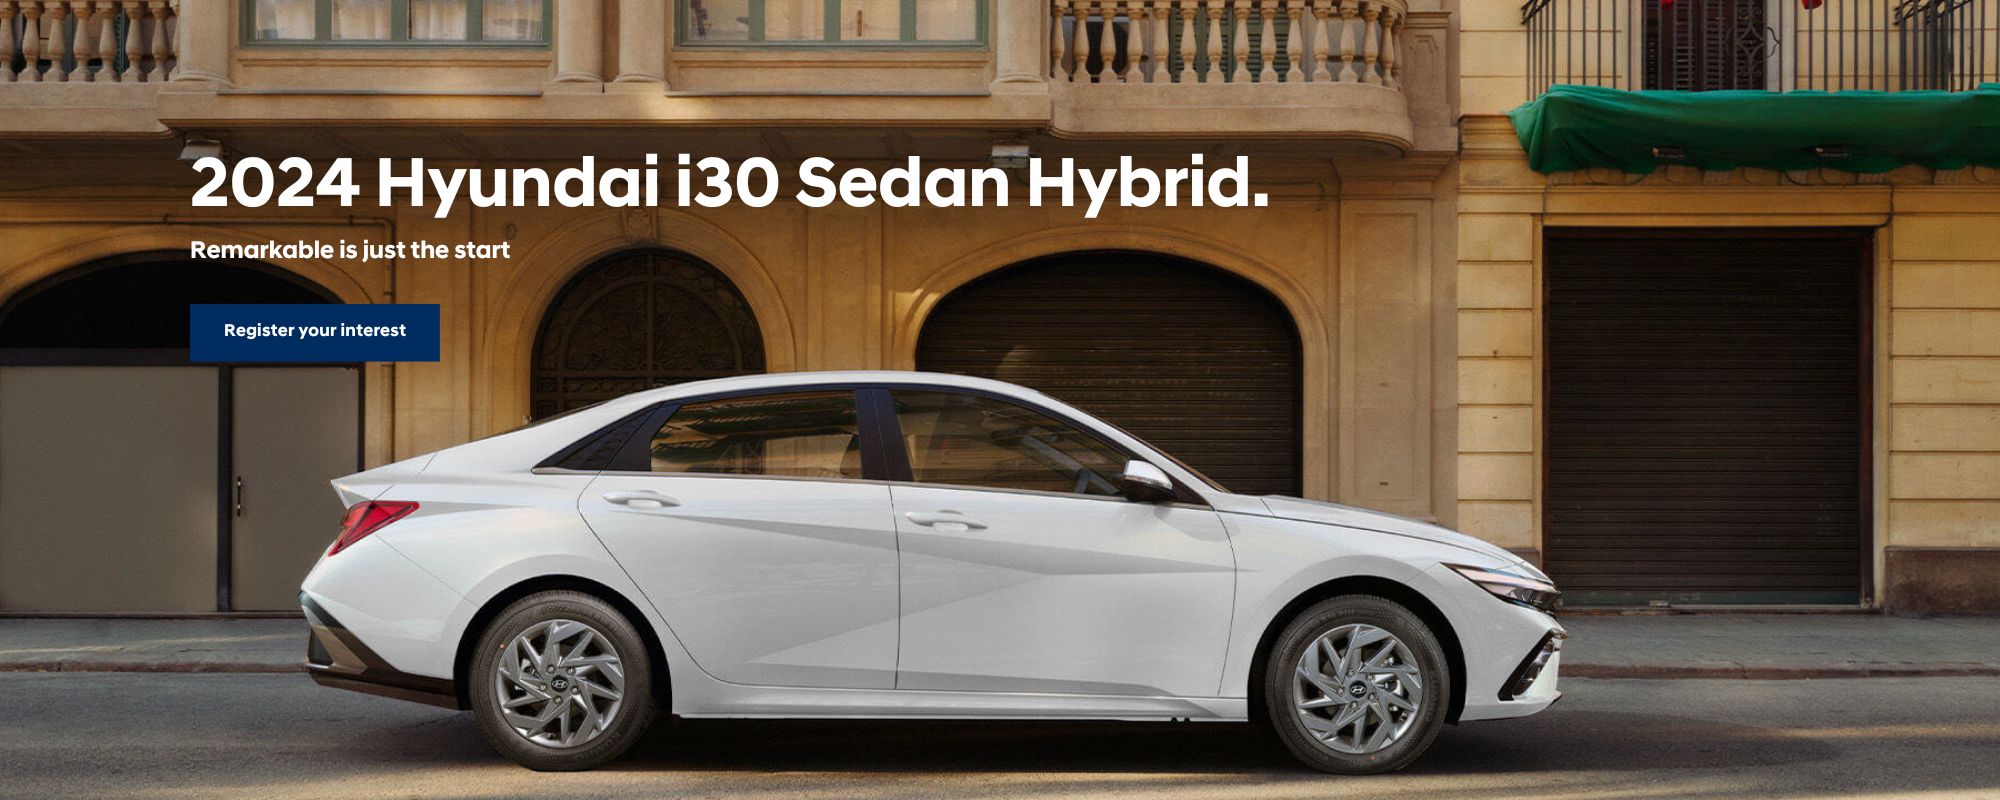 2024 Hyundai i30 Sedan Hybrid. Remarkable is just the start.